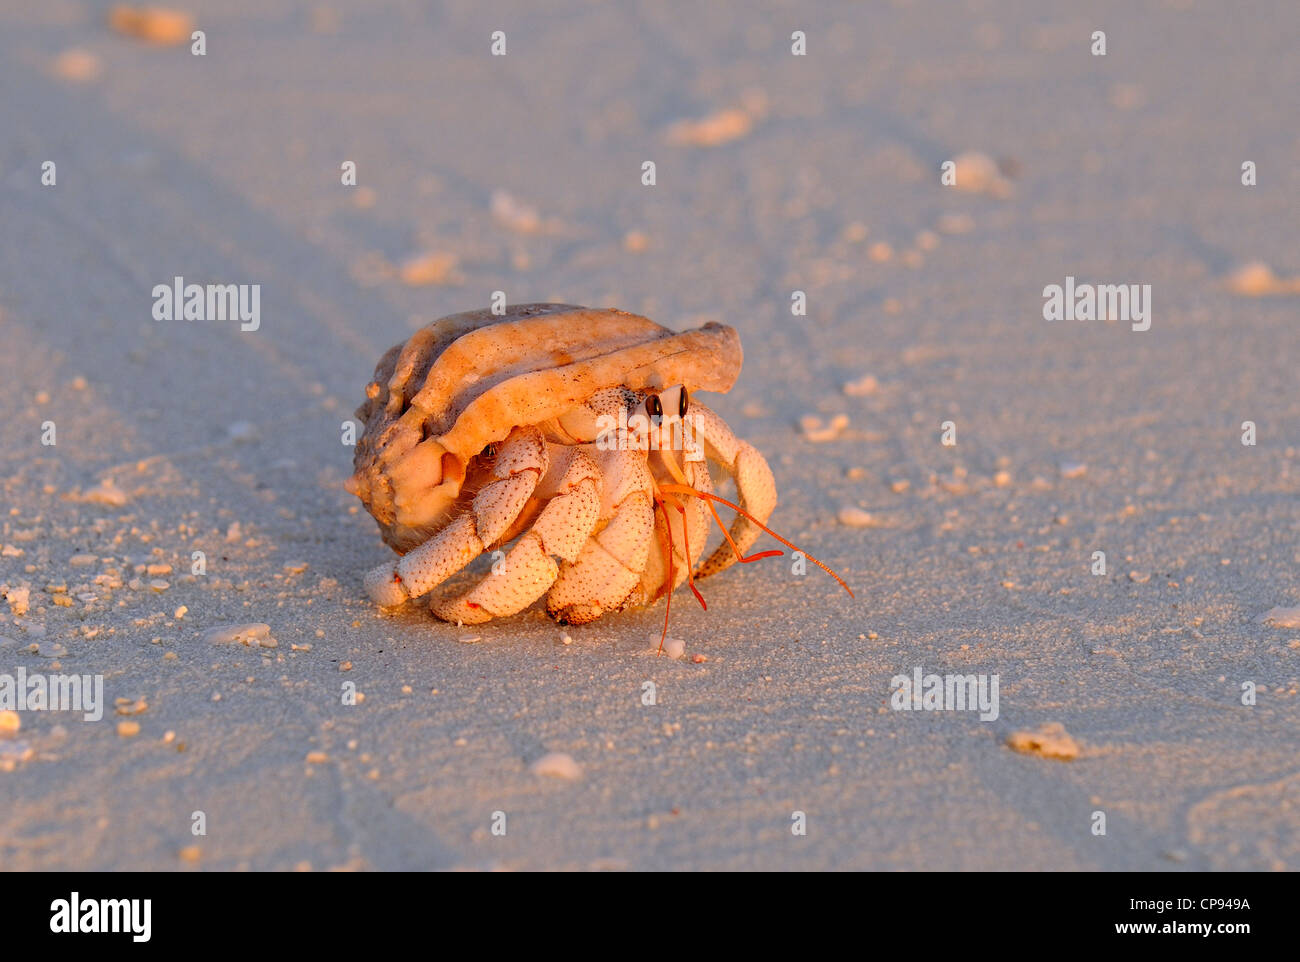 Strawberry land Hermit Crab on beach at sunset, The Maldives Stock Photo